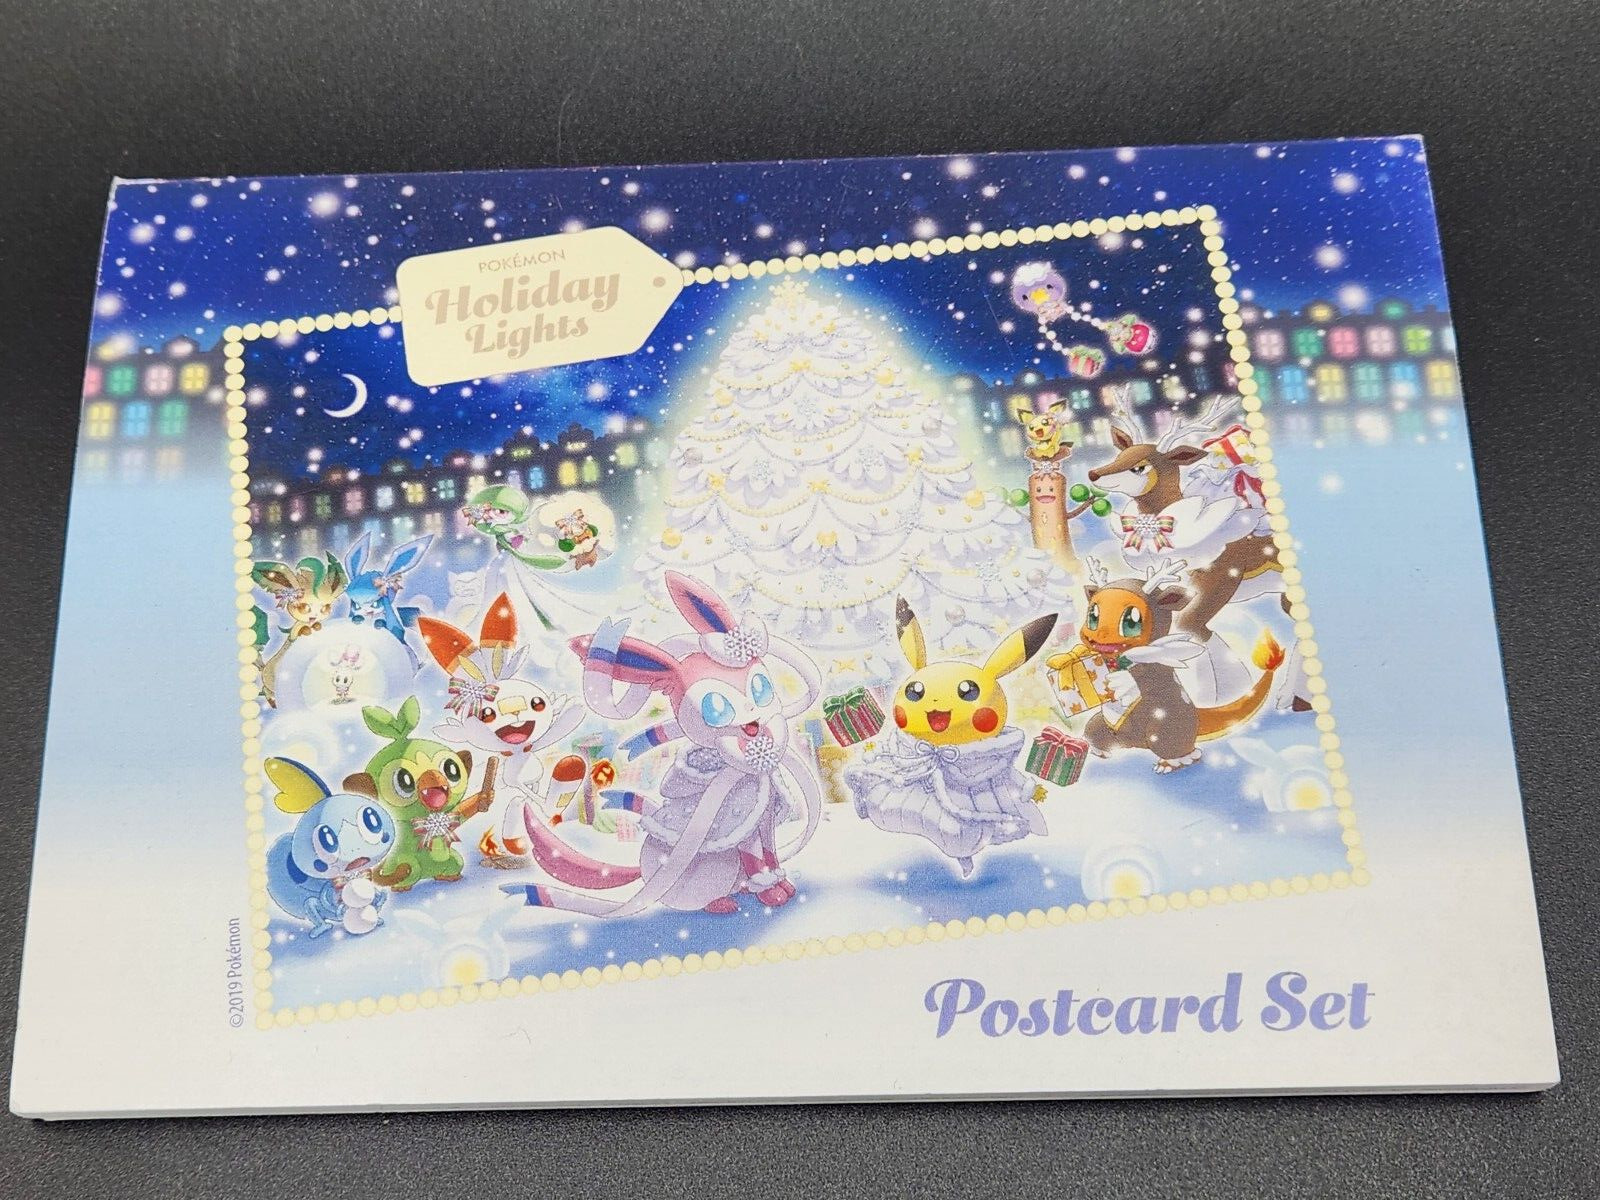 2019 Pokémon Holiday Lights Postcard Set Complete New